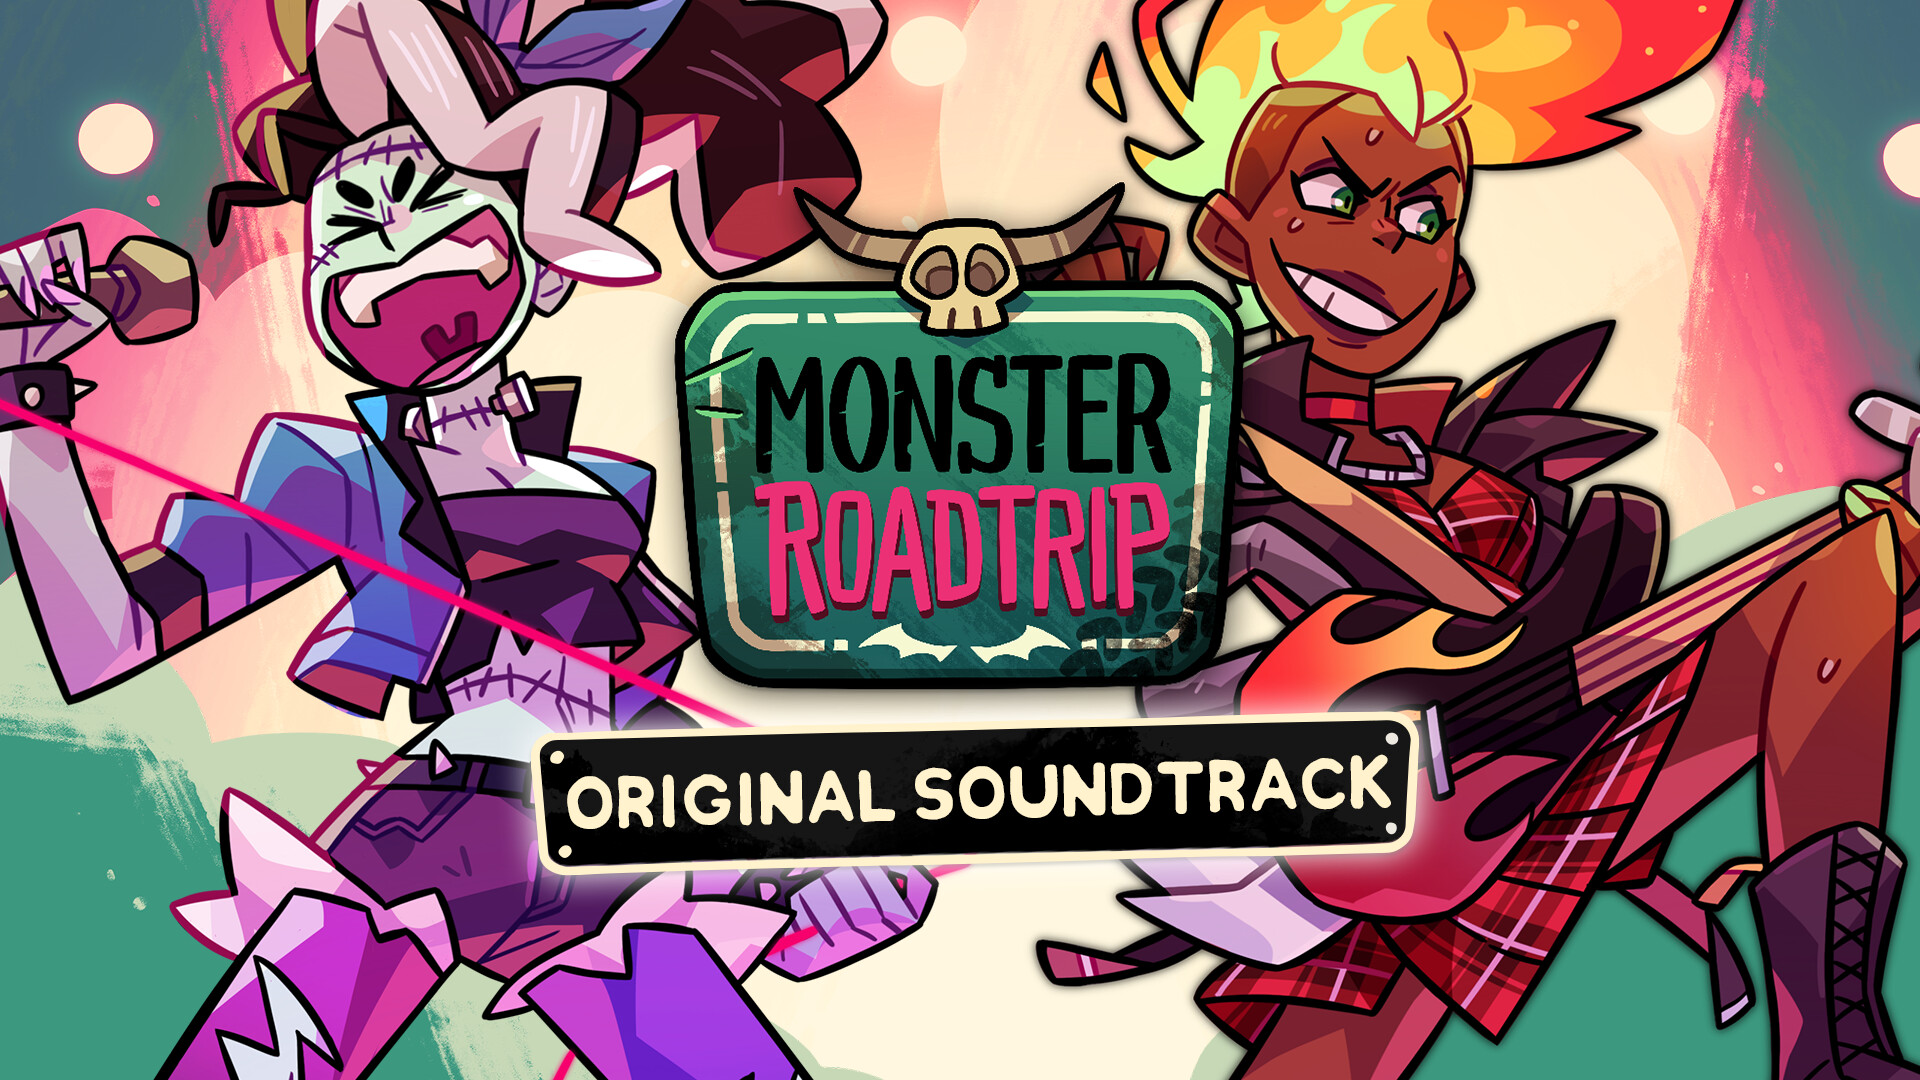 Monster Prom 3: Monster Roadtrip Soundtrack Featured Screenshot #1